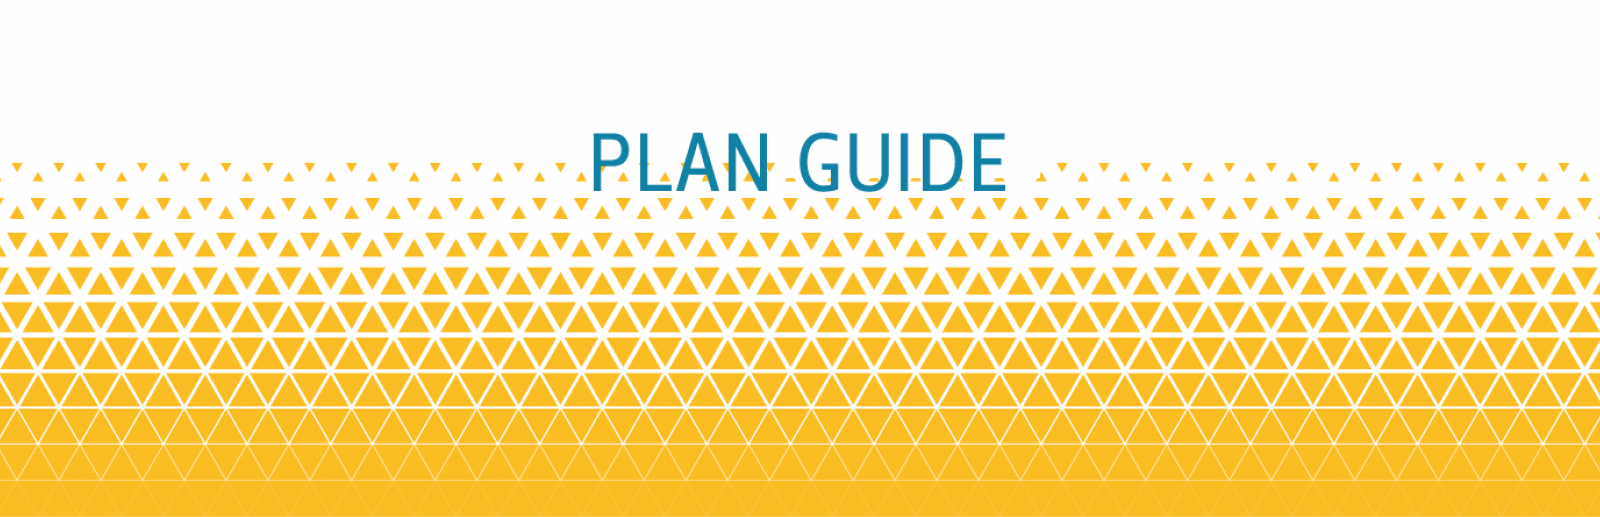 Plan guide